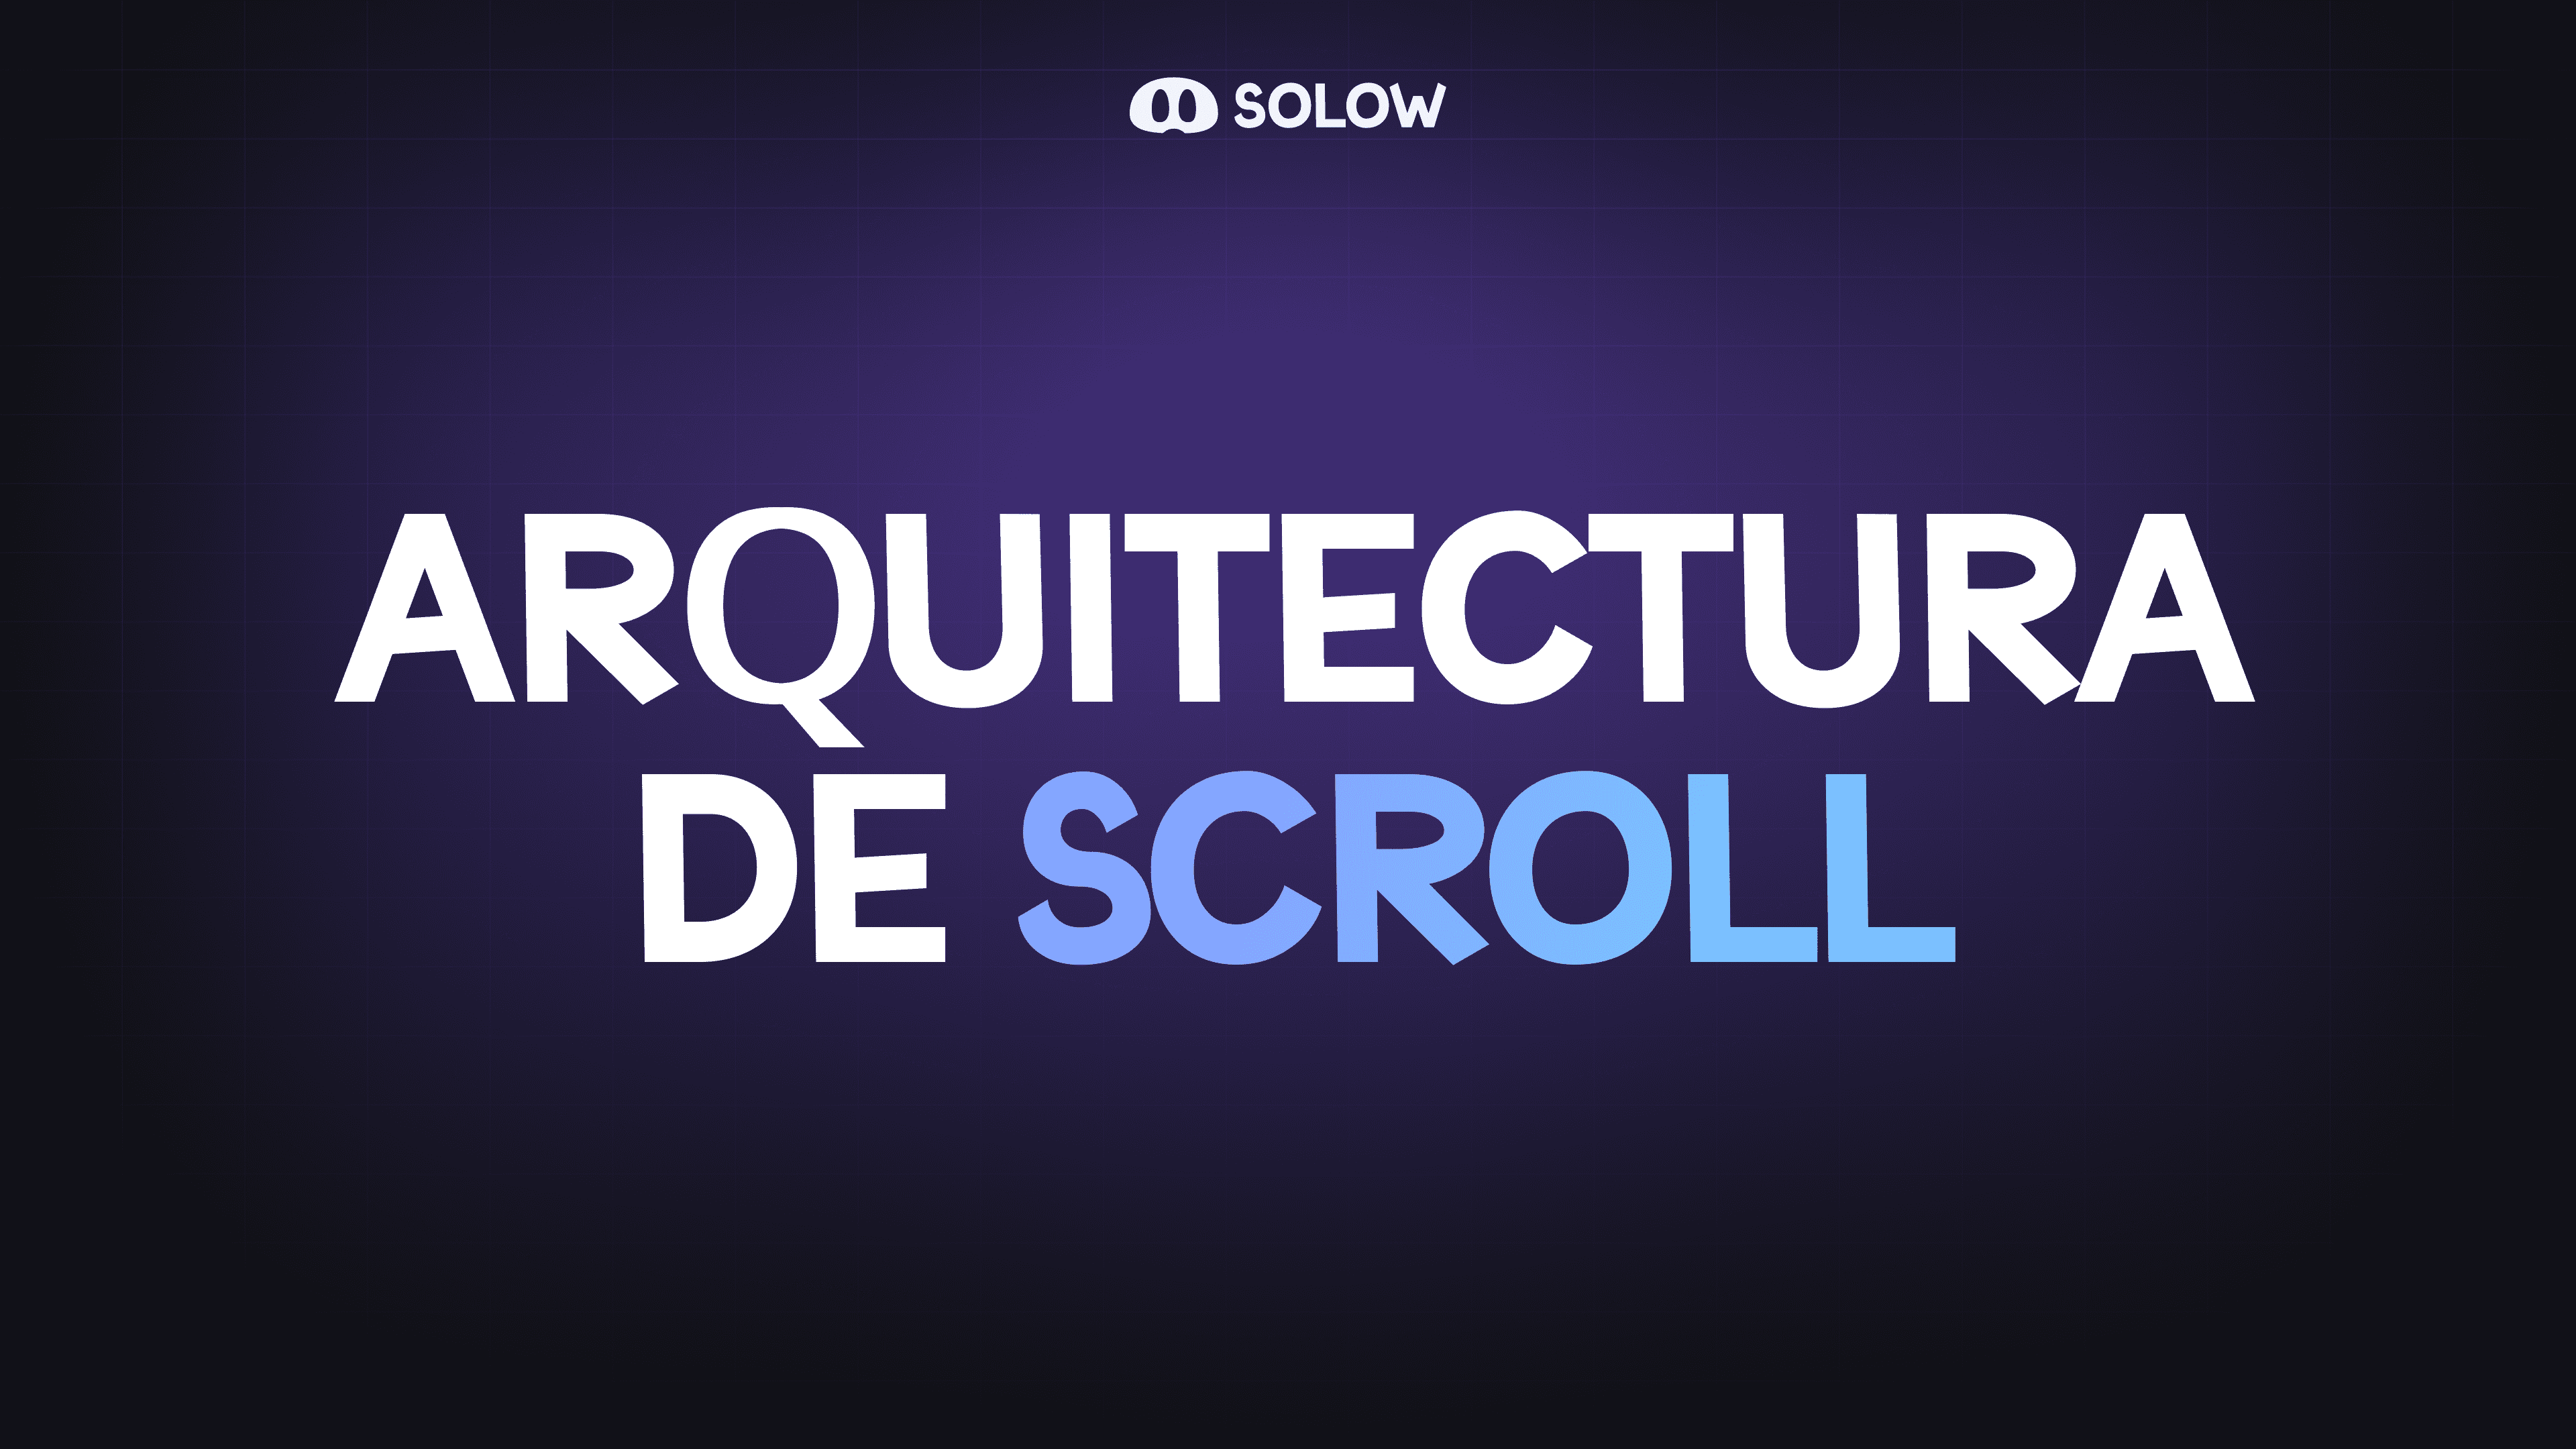 Arquitectura de Scroll